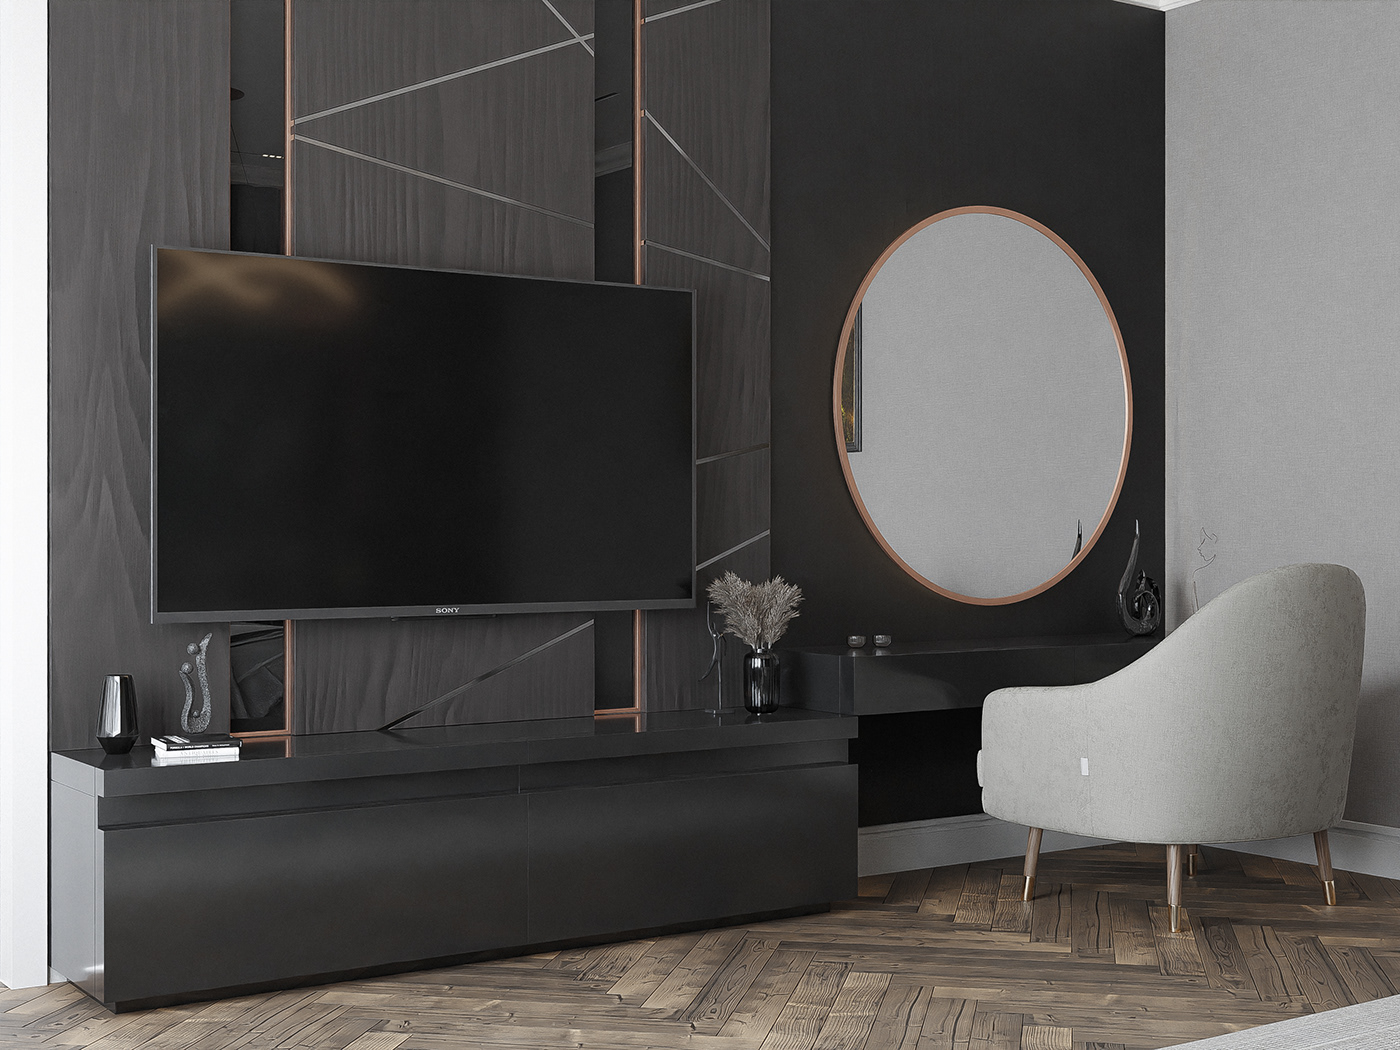 architecture archviz bedroom blender Interior modern Render visualization